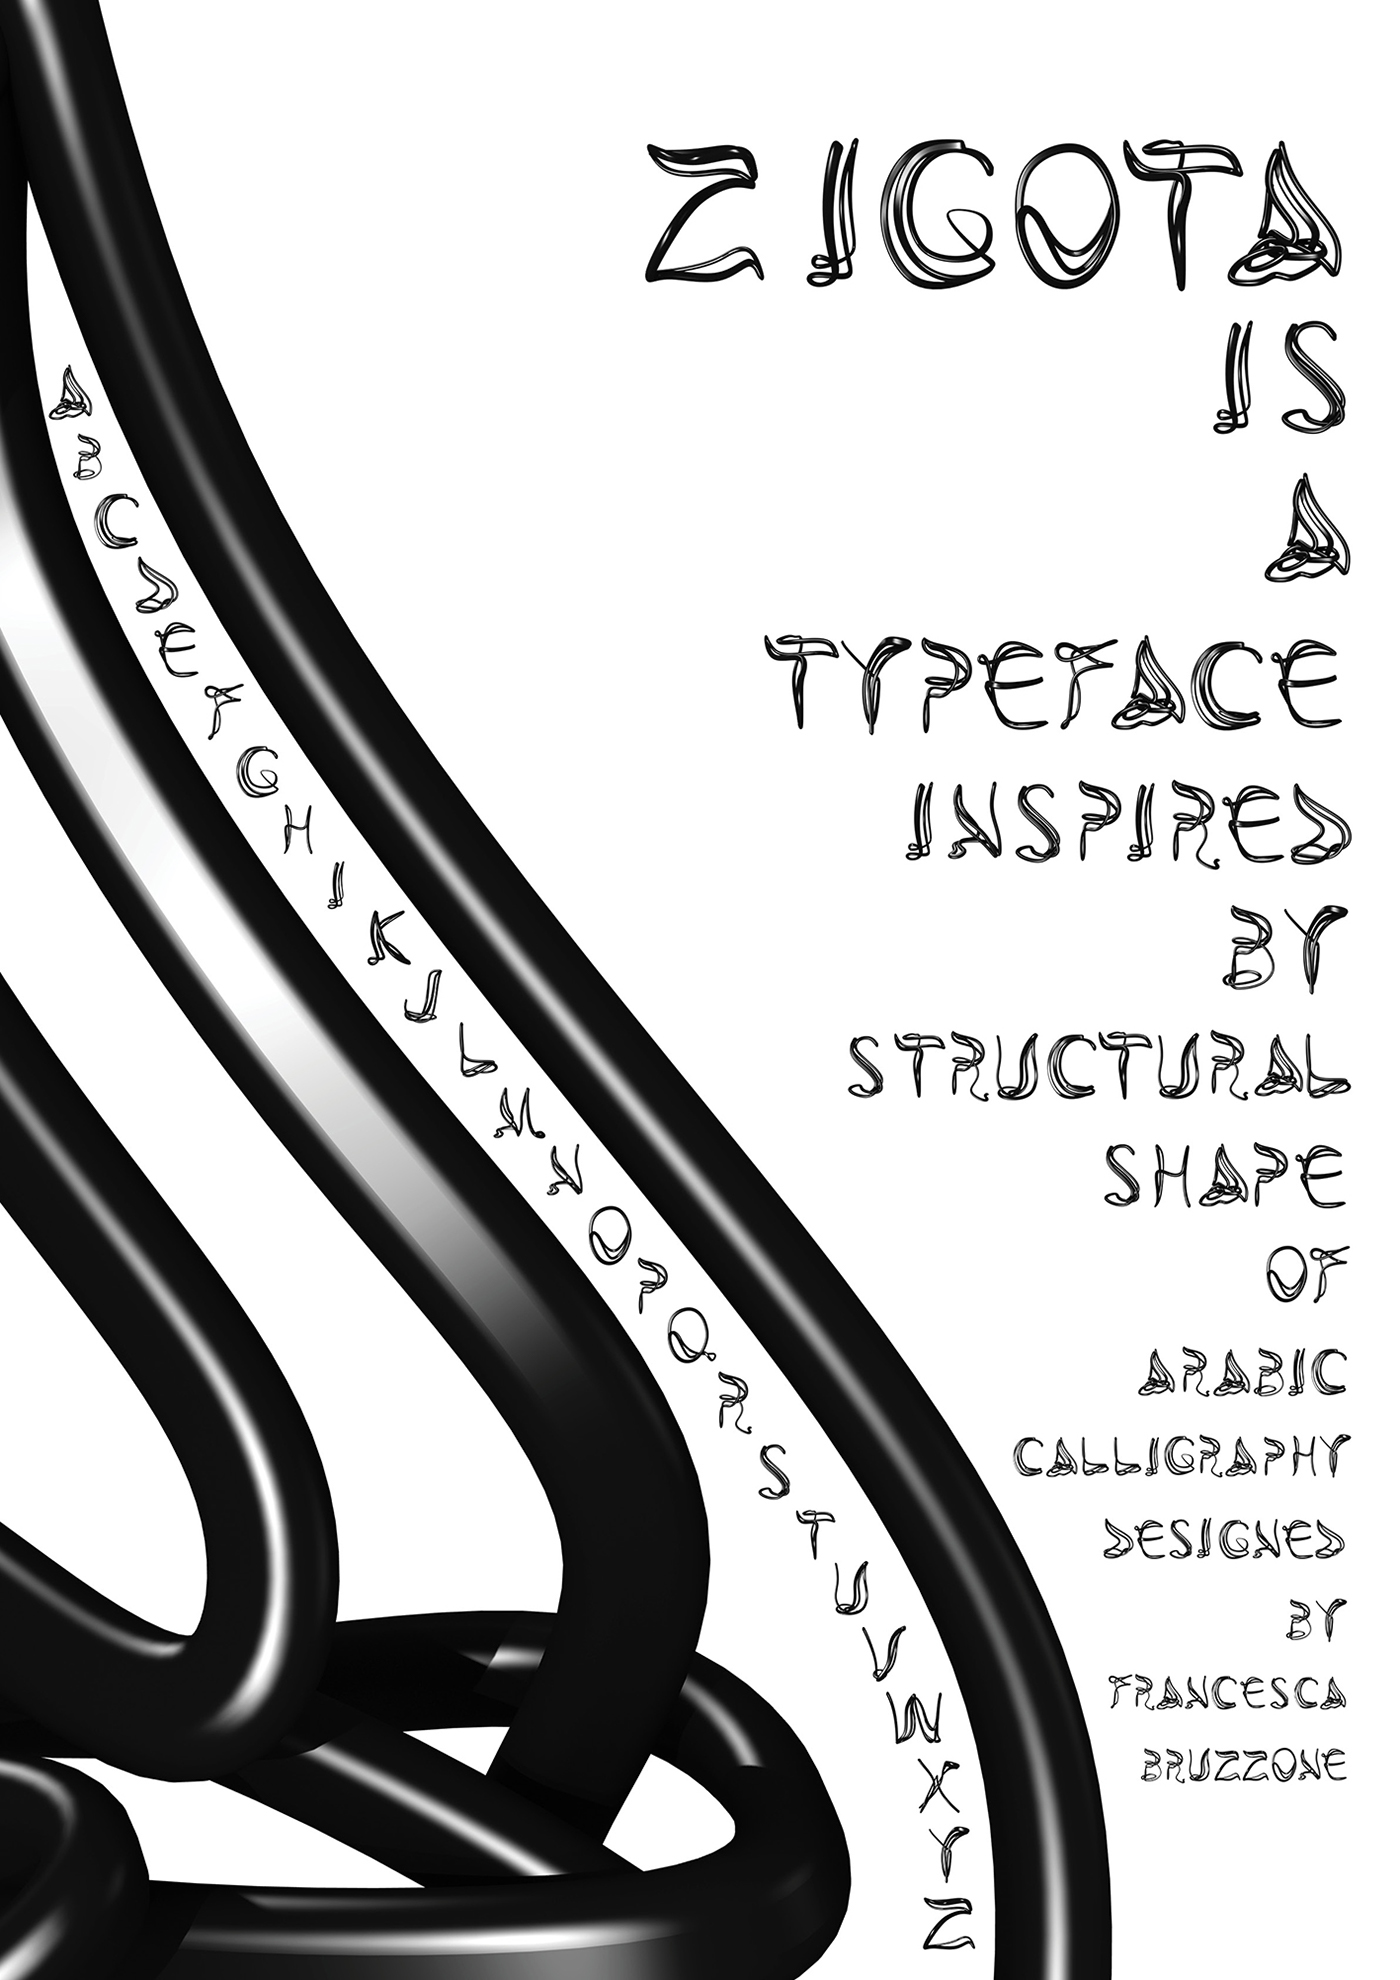 Typeface 3D zigota arabic Calligraphy   type specimen